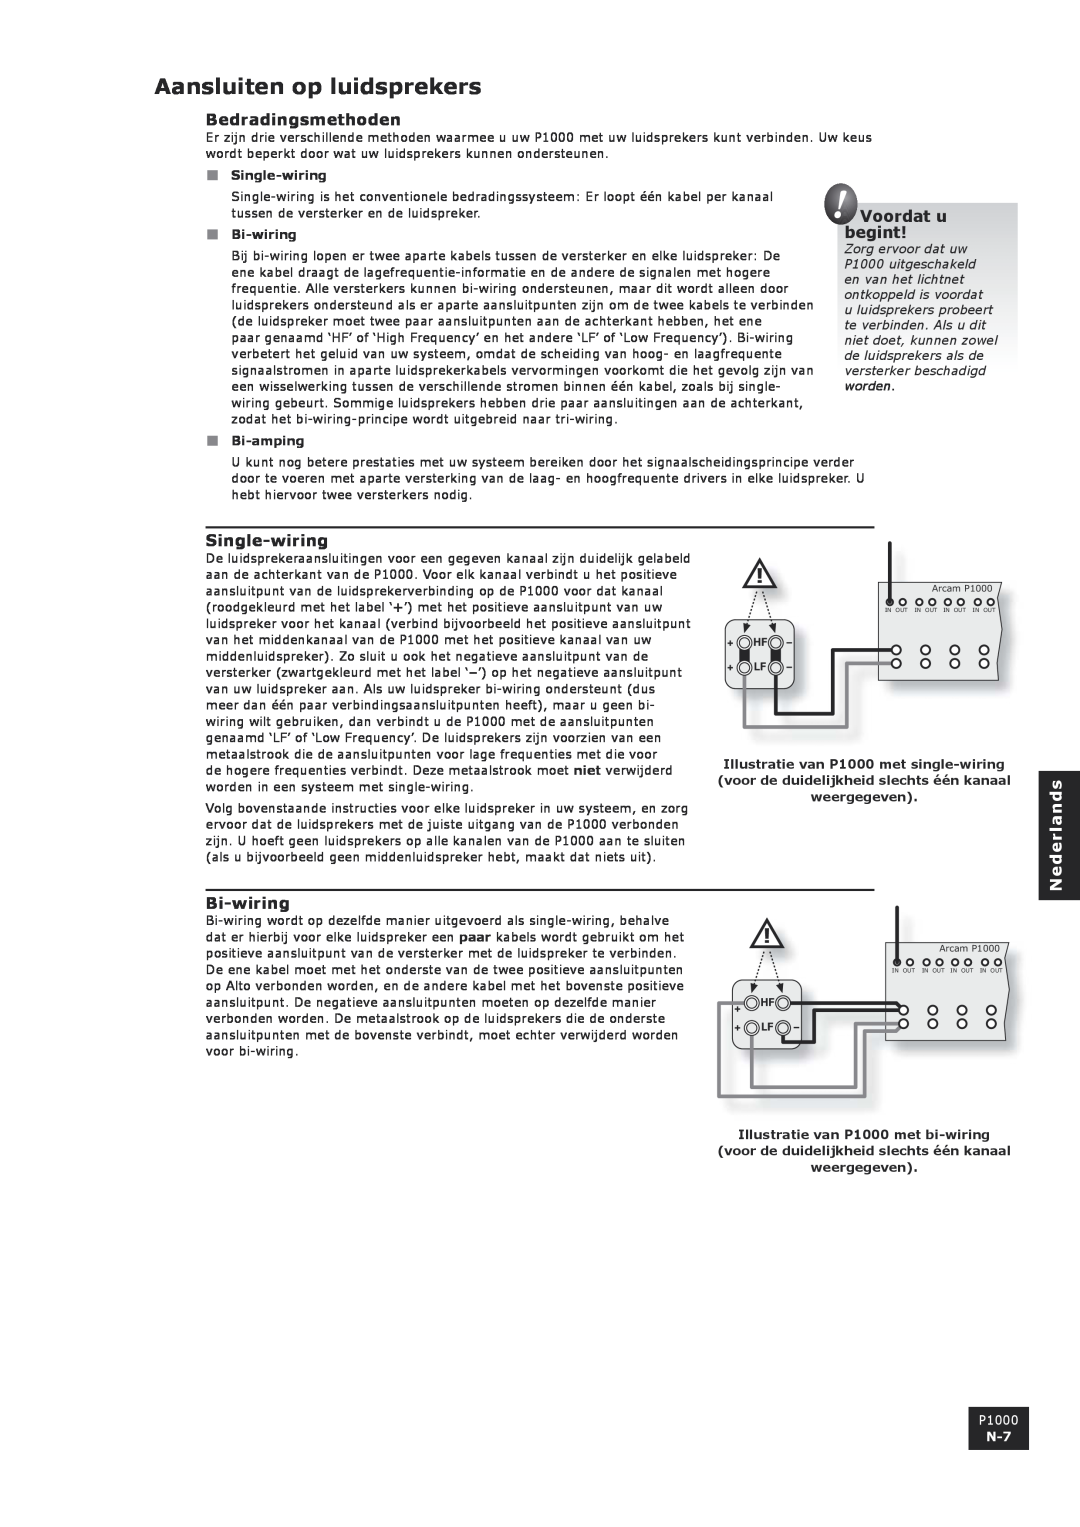 Arcam P1000 manual Aansluiten op luidsprekers, Bedradingsmethoden, Voordat u begint, Single-wiring, Bi-wiring, Bi-amping 